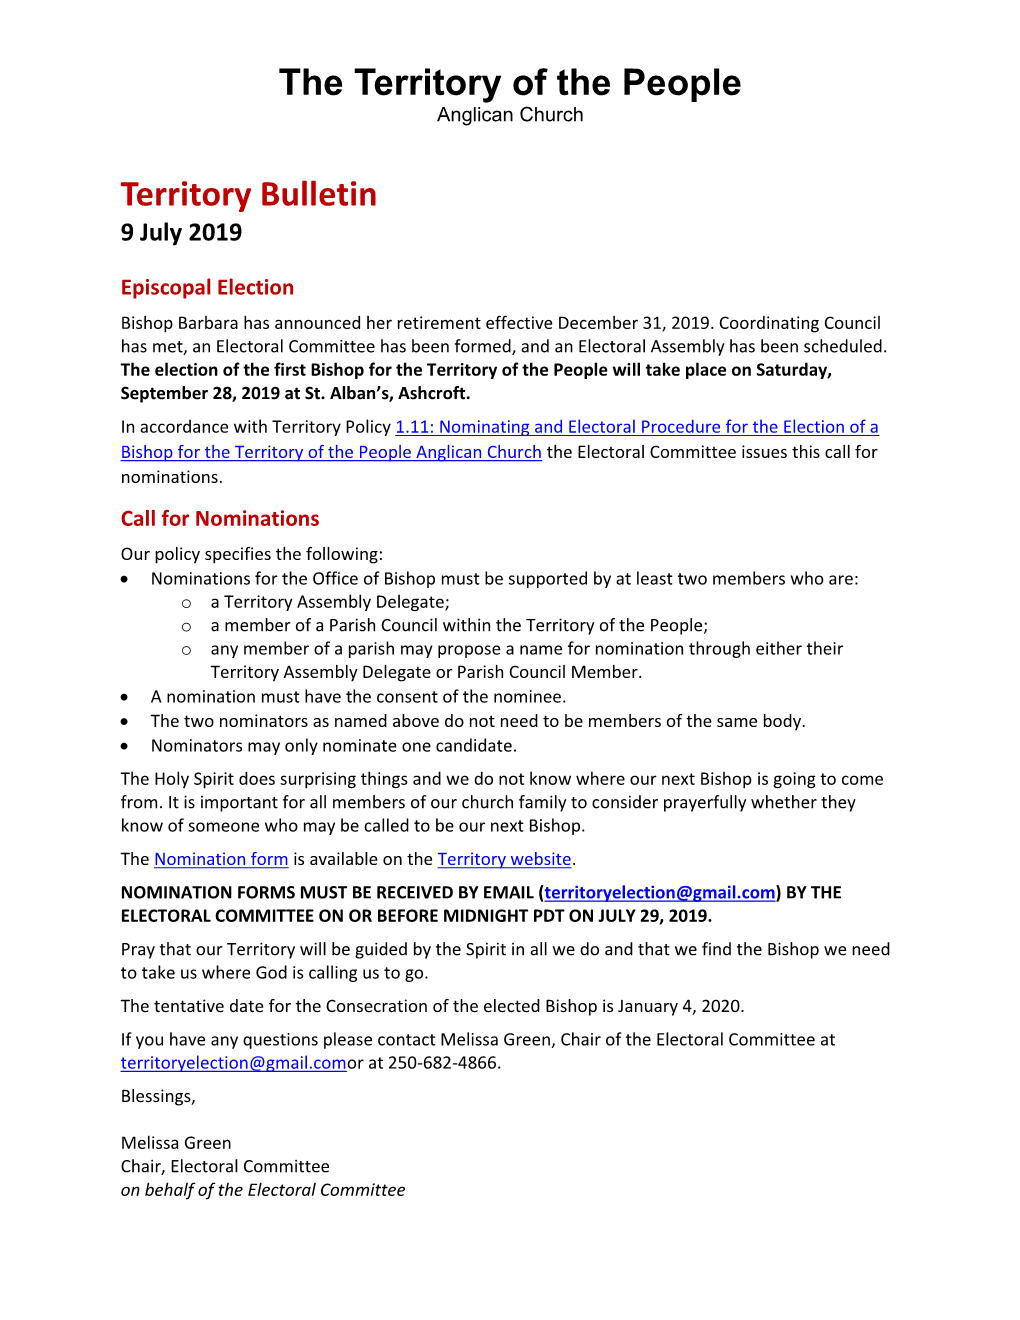 The Territory of the People Territory Bulletin